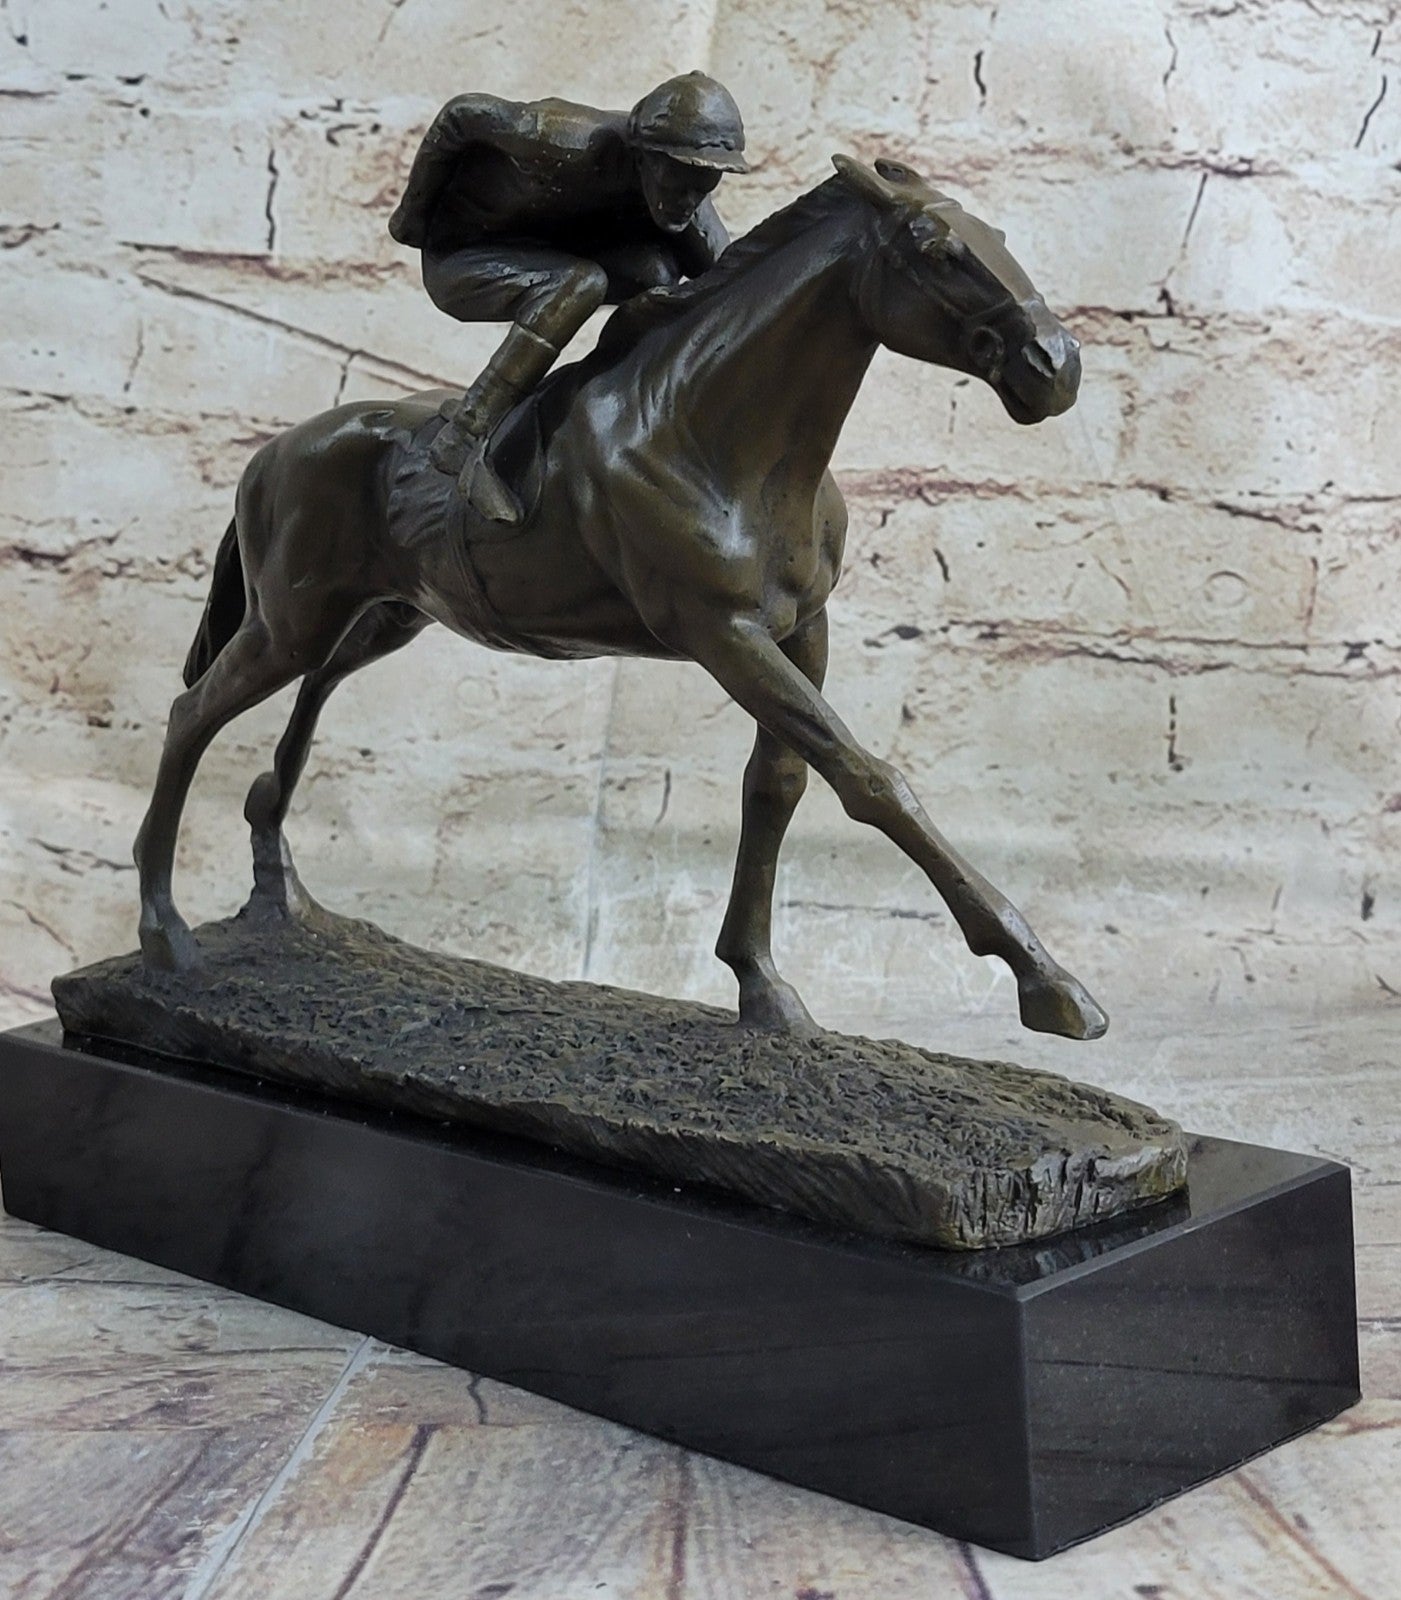 100% Bronze Sculpture Original  Signed Statue Of Jockey& Race Horse Office Trophy